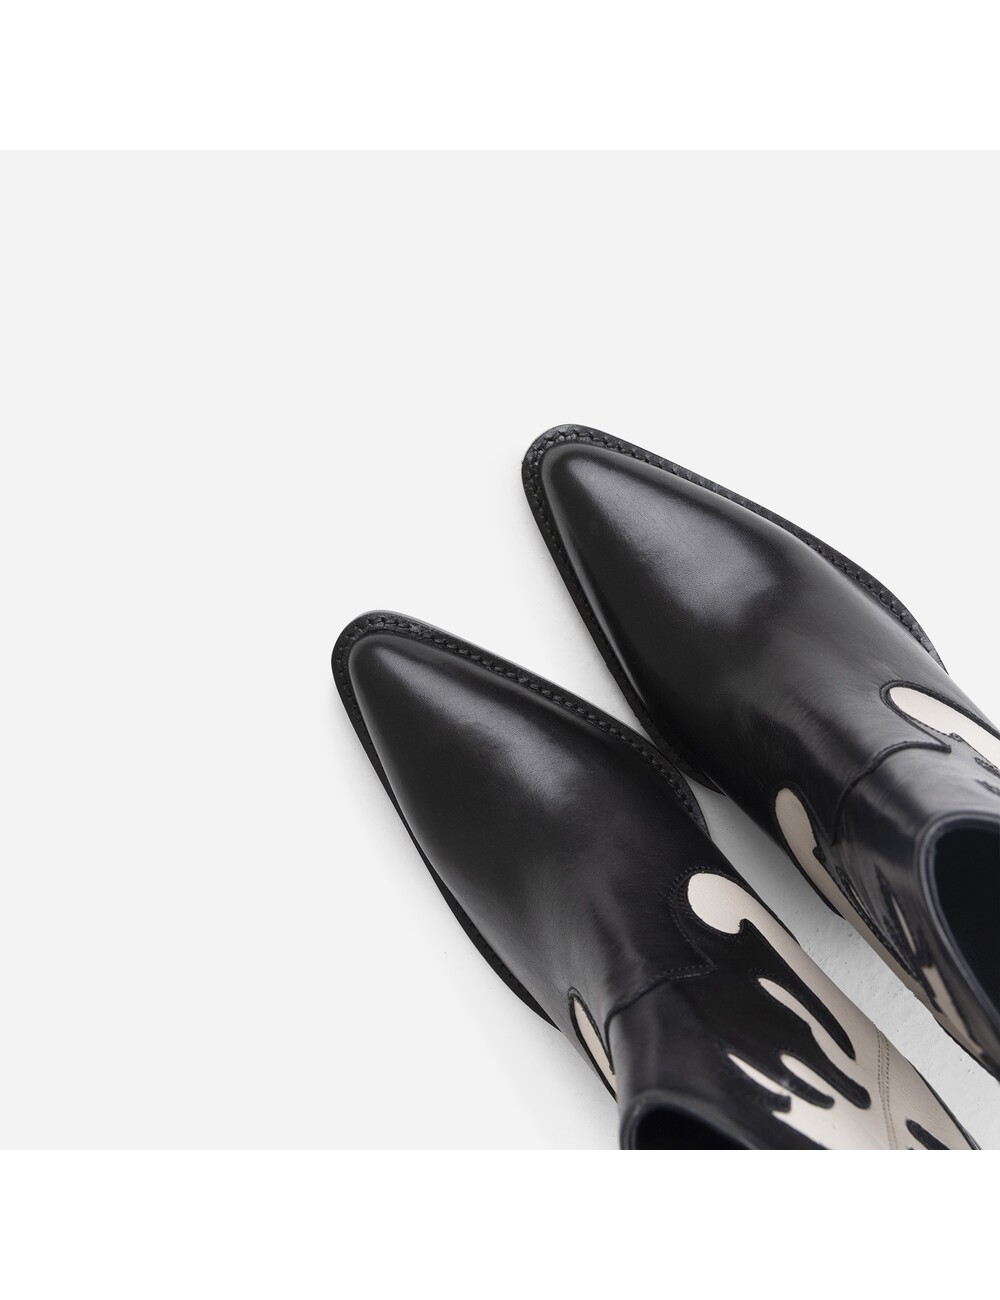 BRONX Shoes BRONX NEW KOLE ANKLE BOOTS BLACK WHITE LEATHER